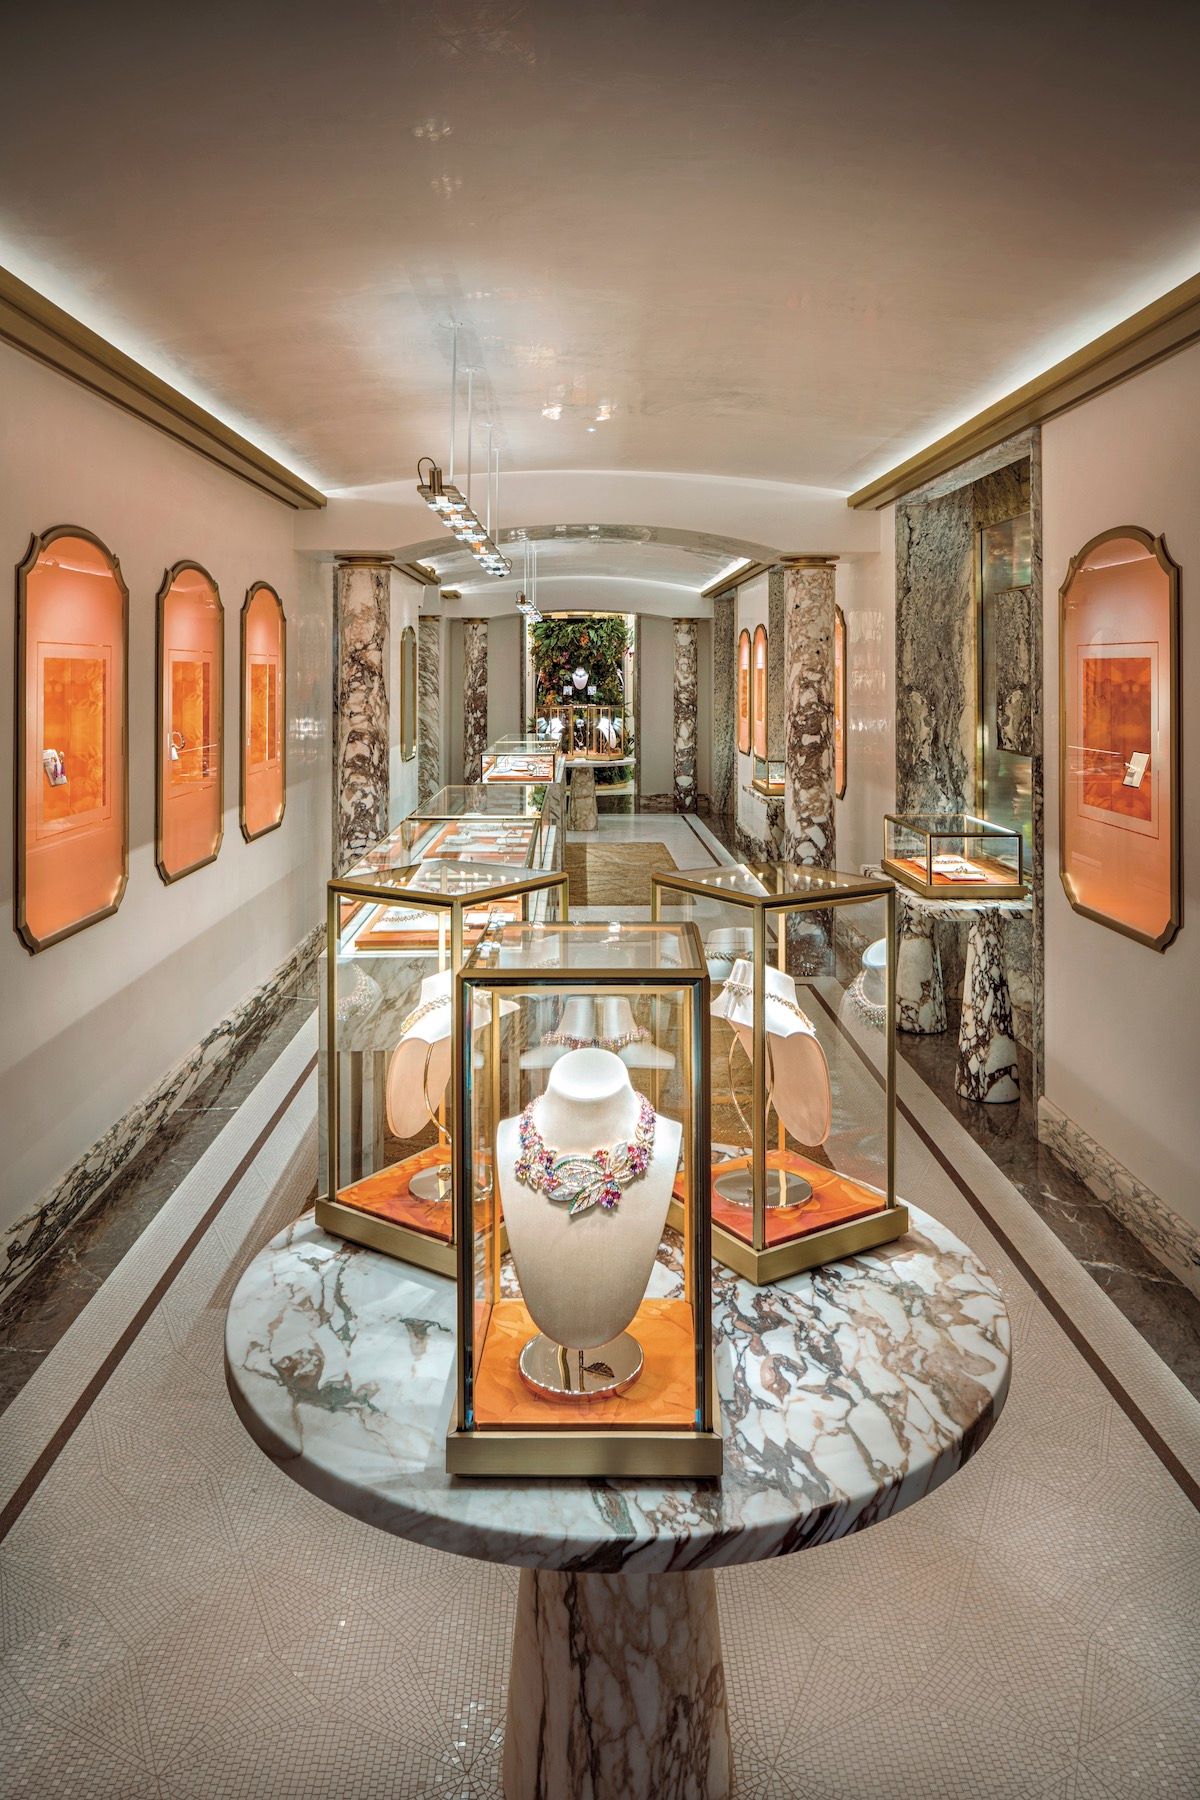 Bulgari Eden, The Garden of Wonders High Jewelry Collection